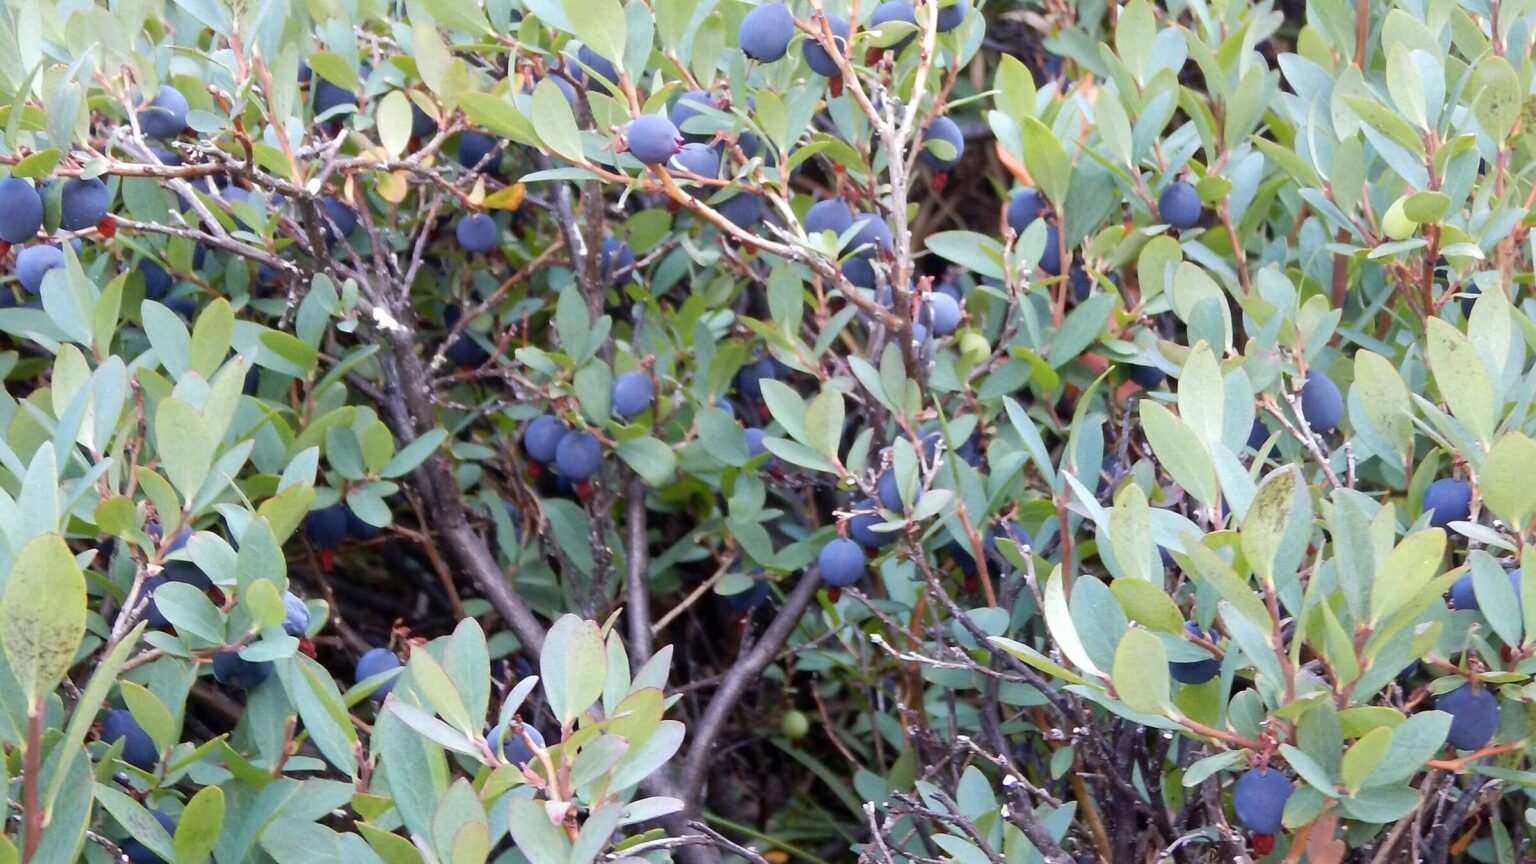 John Muir Wilderness, backpacking, bog blueberry (Vaccinium uliginosum), September